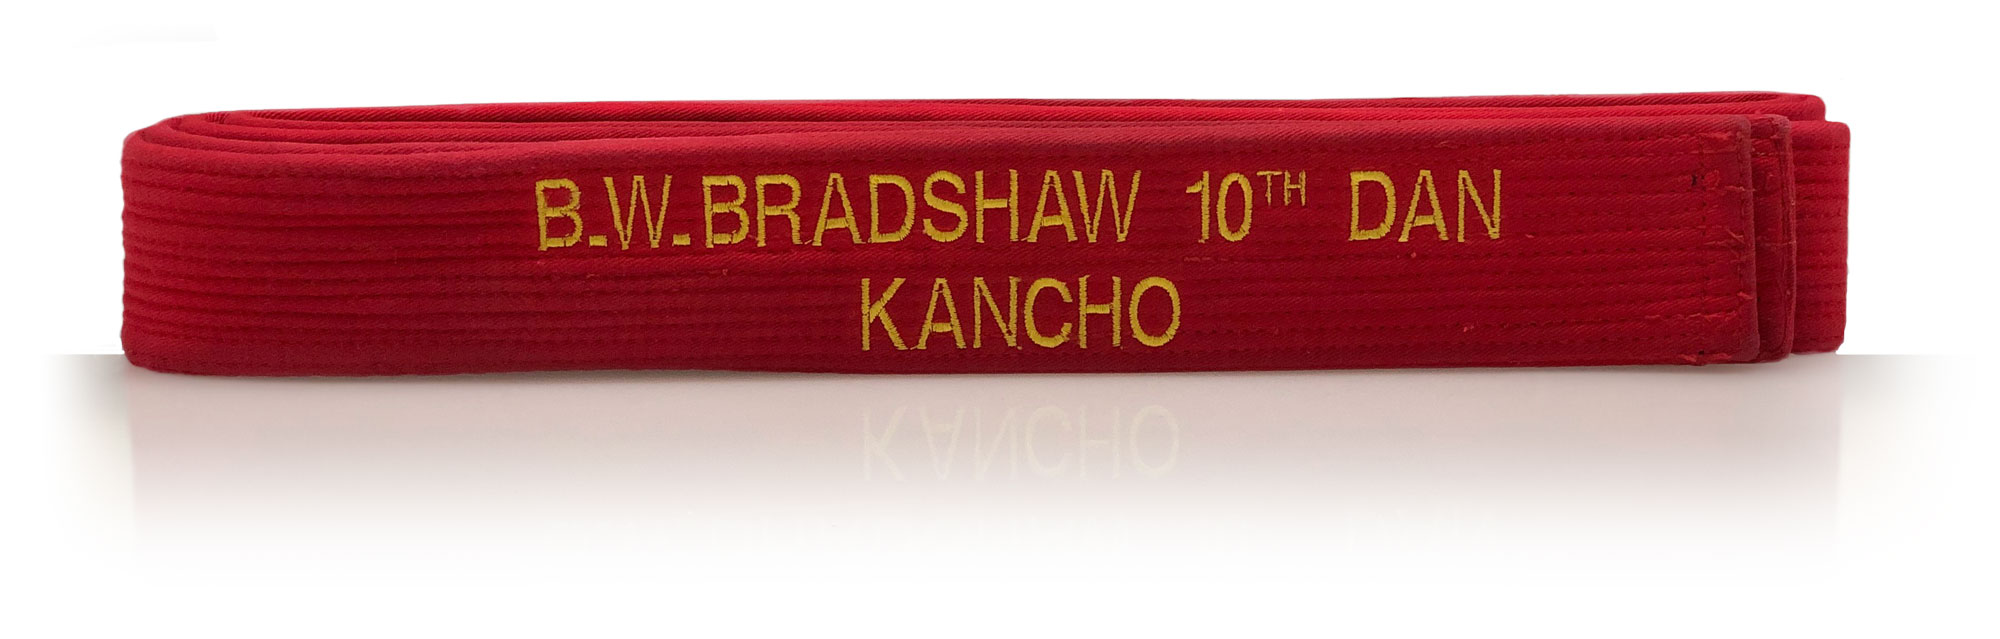 Kancho Bradshaw's Cerminonial 10th Dan Belt